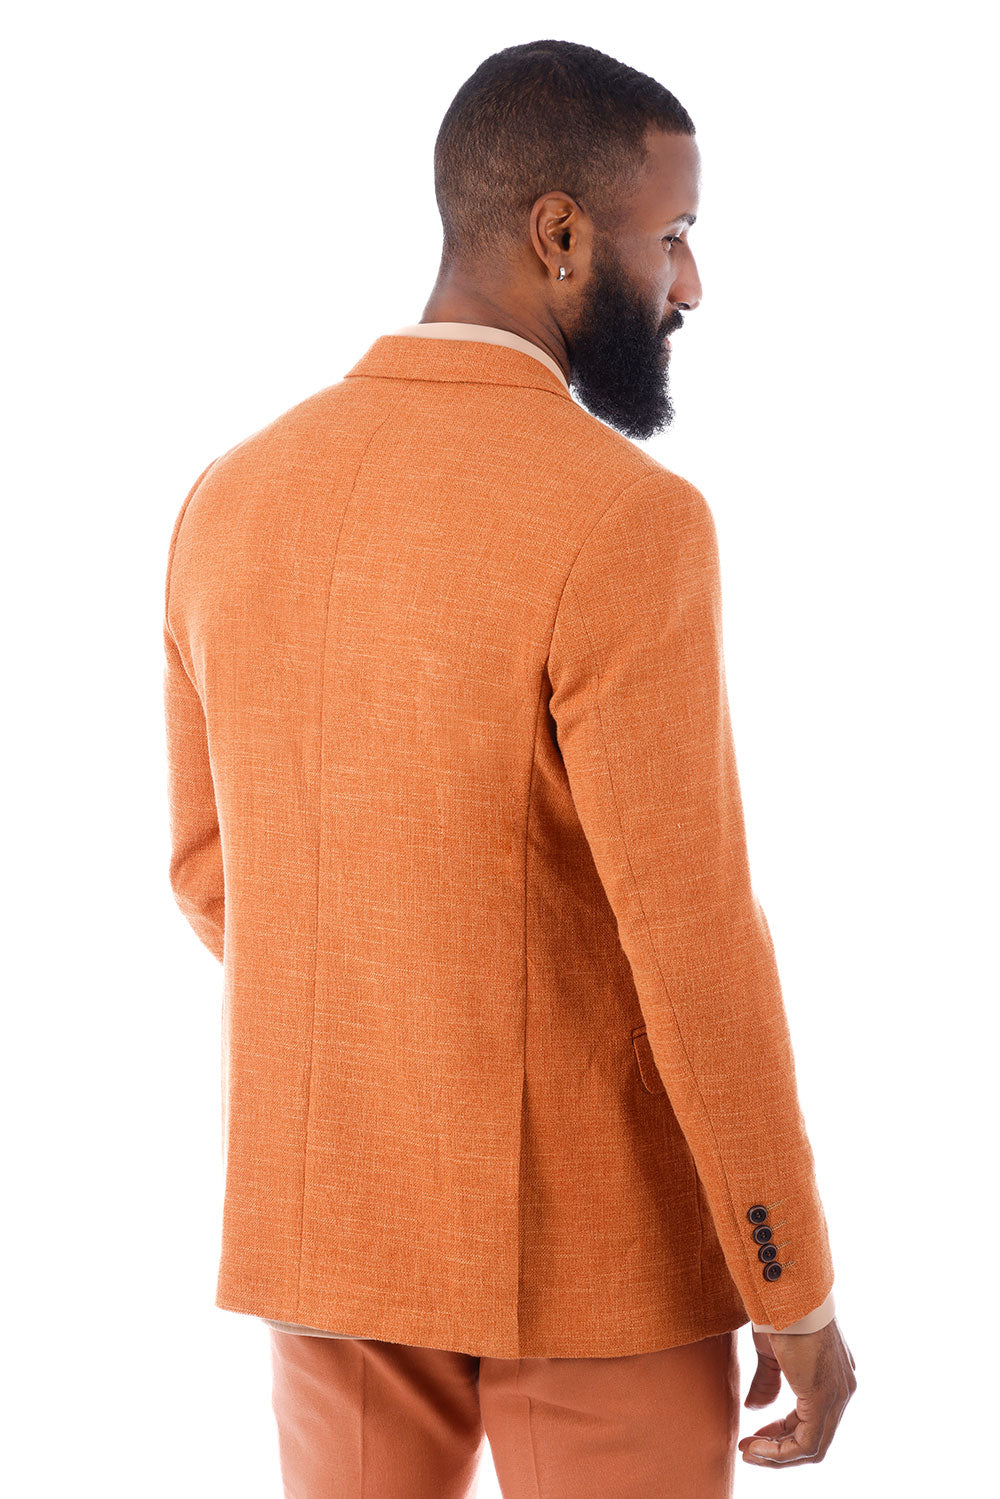 Barabas Men's Classic Tweed Pattern Notch Lapel Blazer 4BL30 Caramel